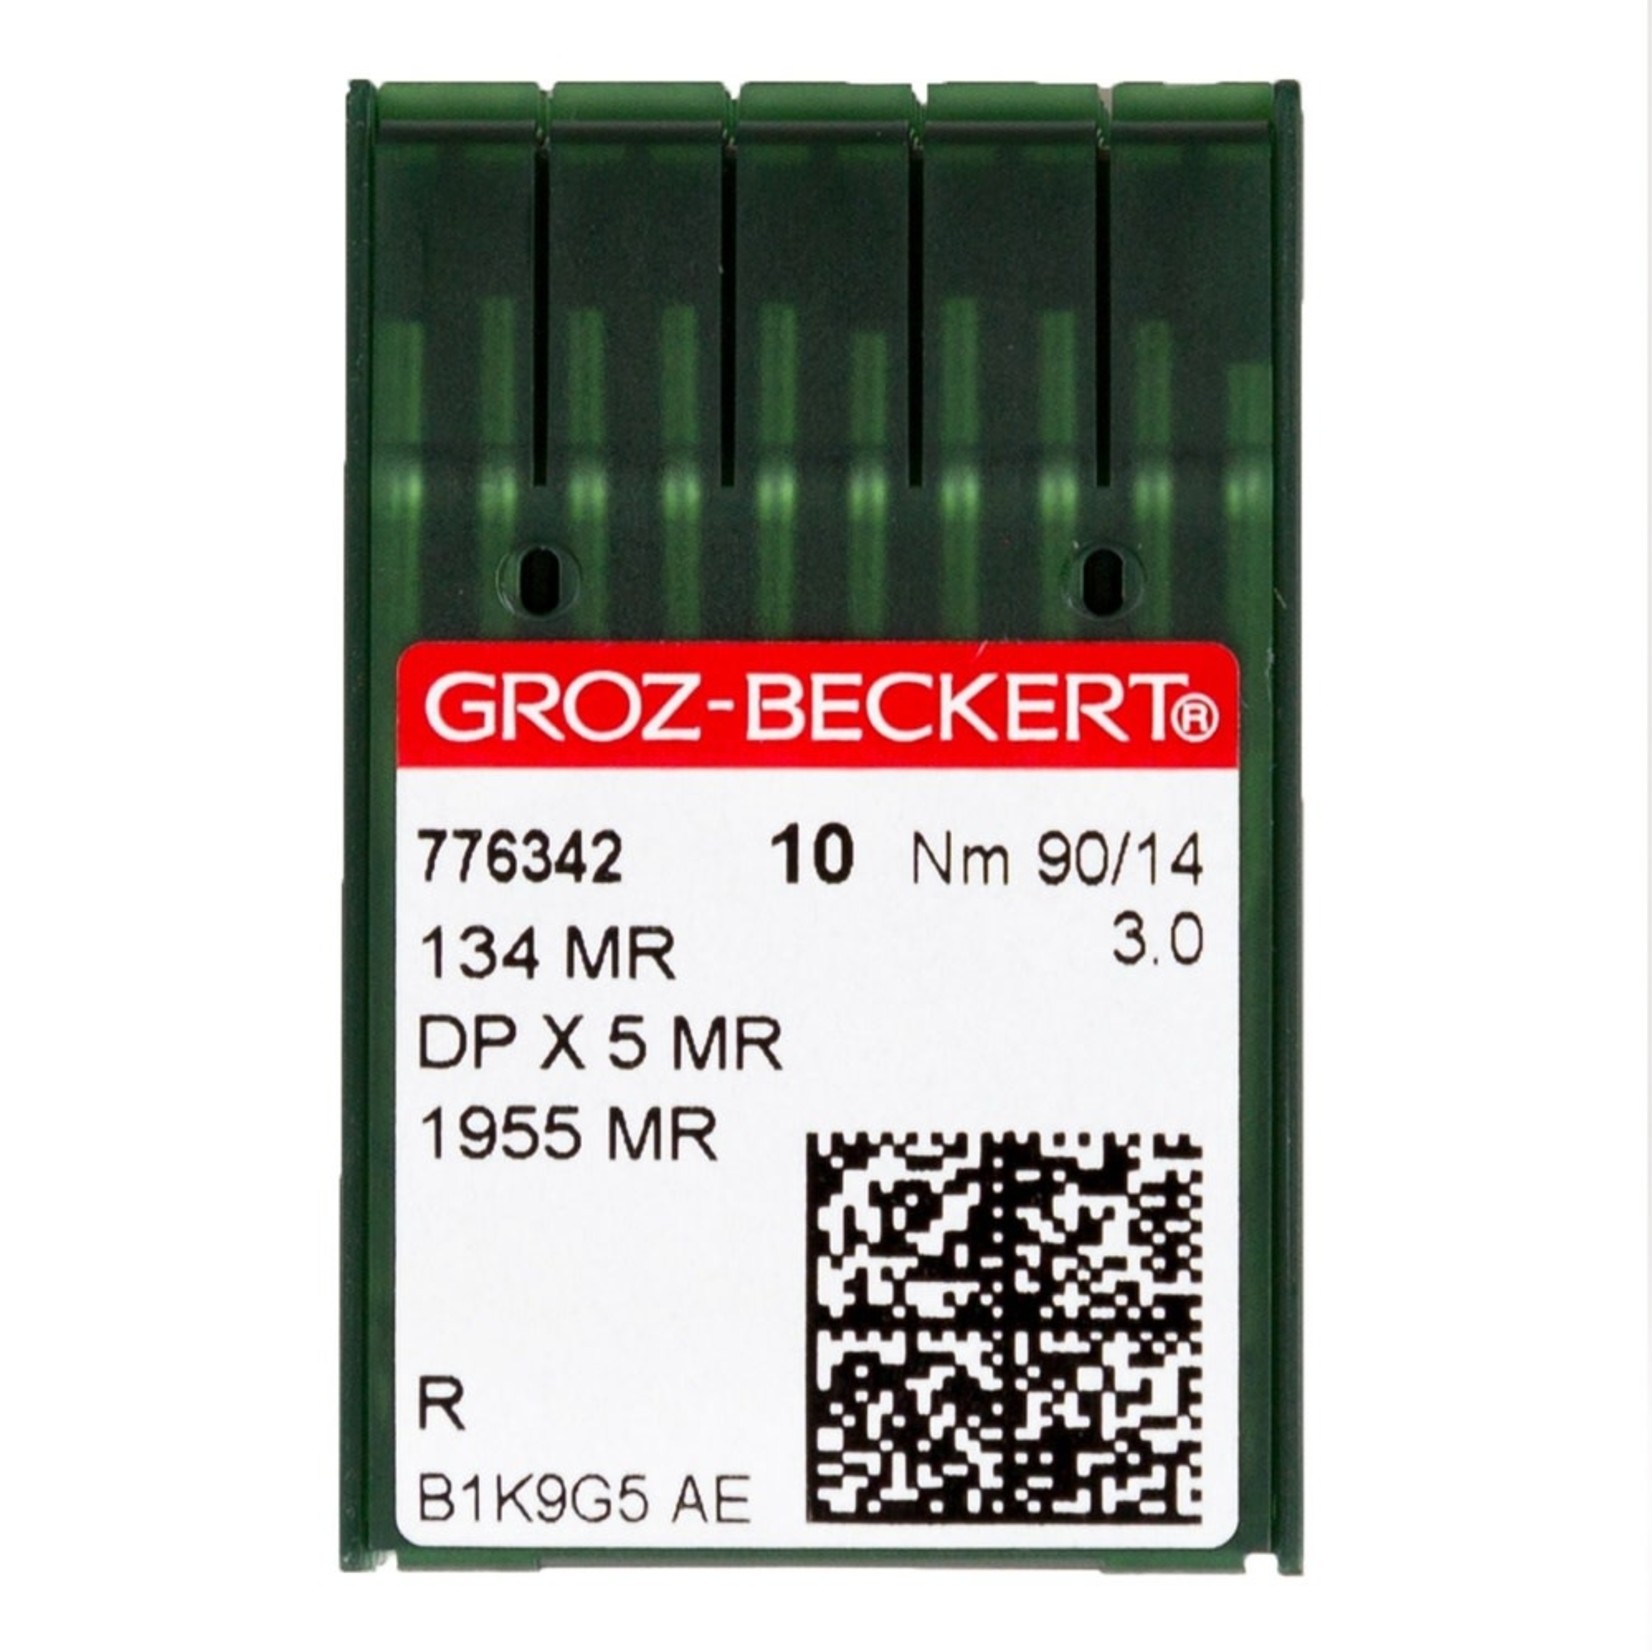 Groz-Beckert Needle MR 3.0 Sharp Set of 10